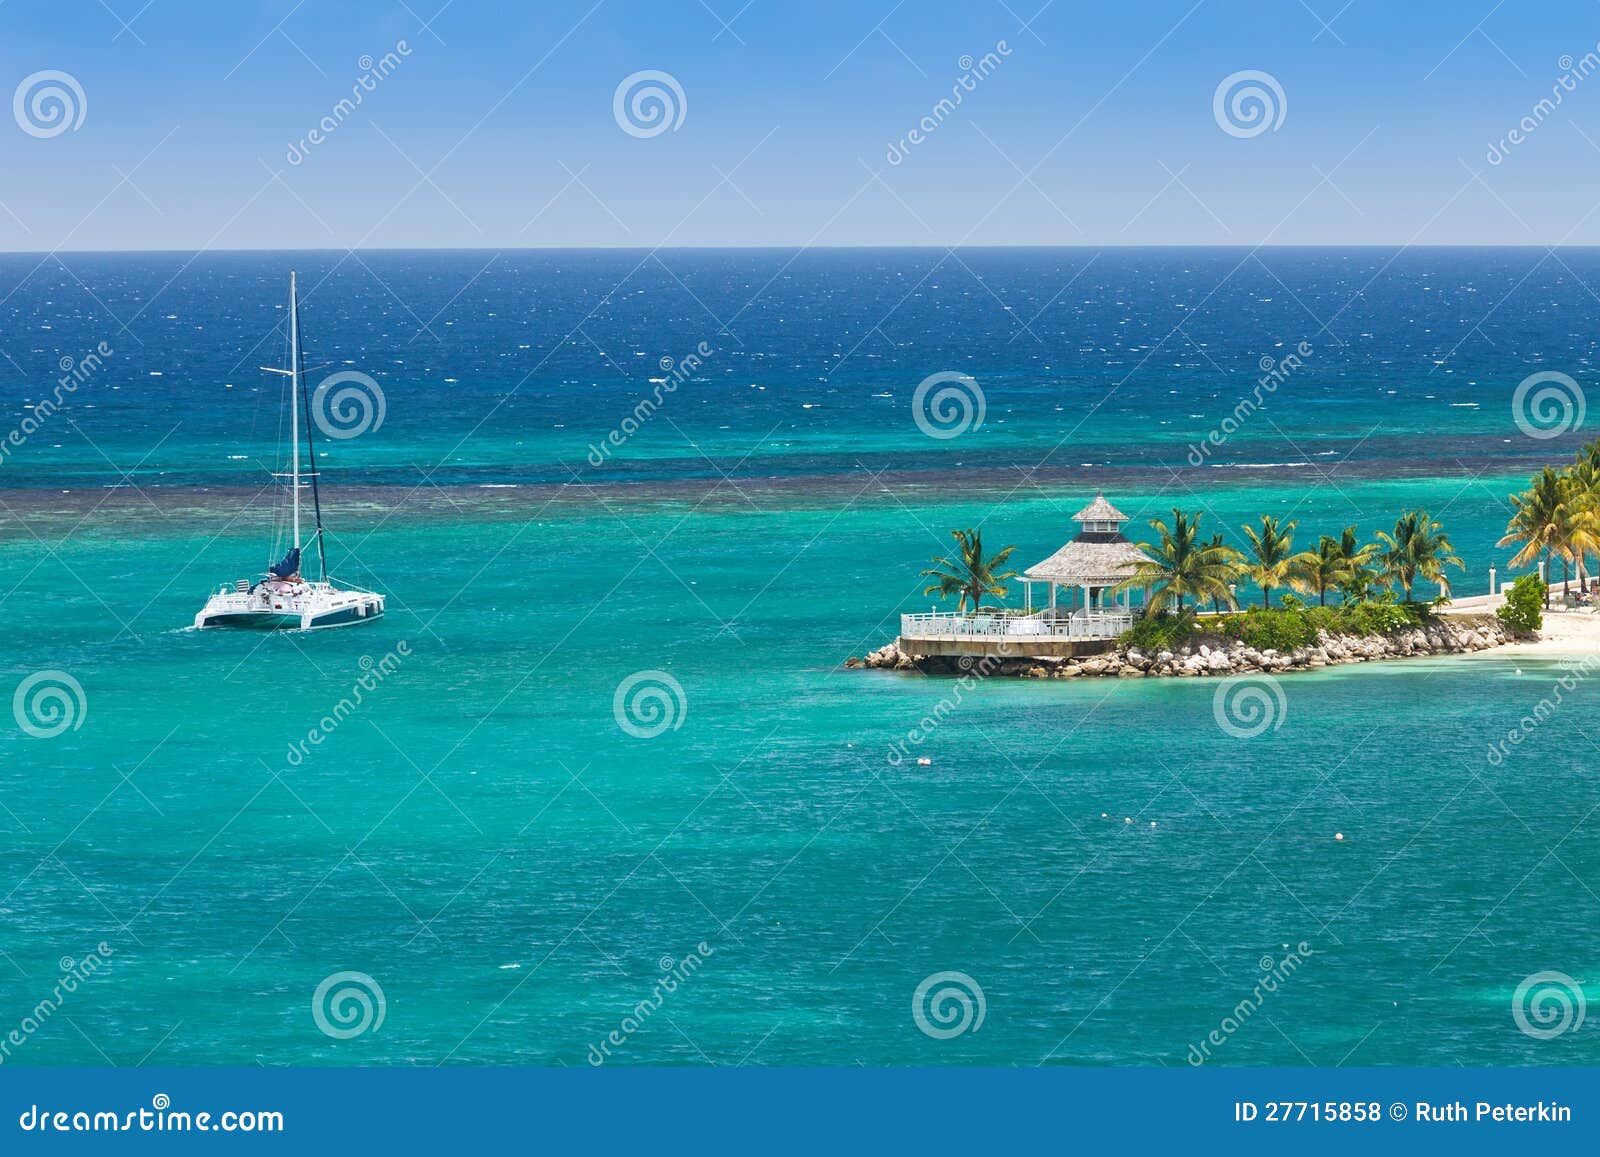 catamaran in ocho rios, jamaica